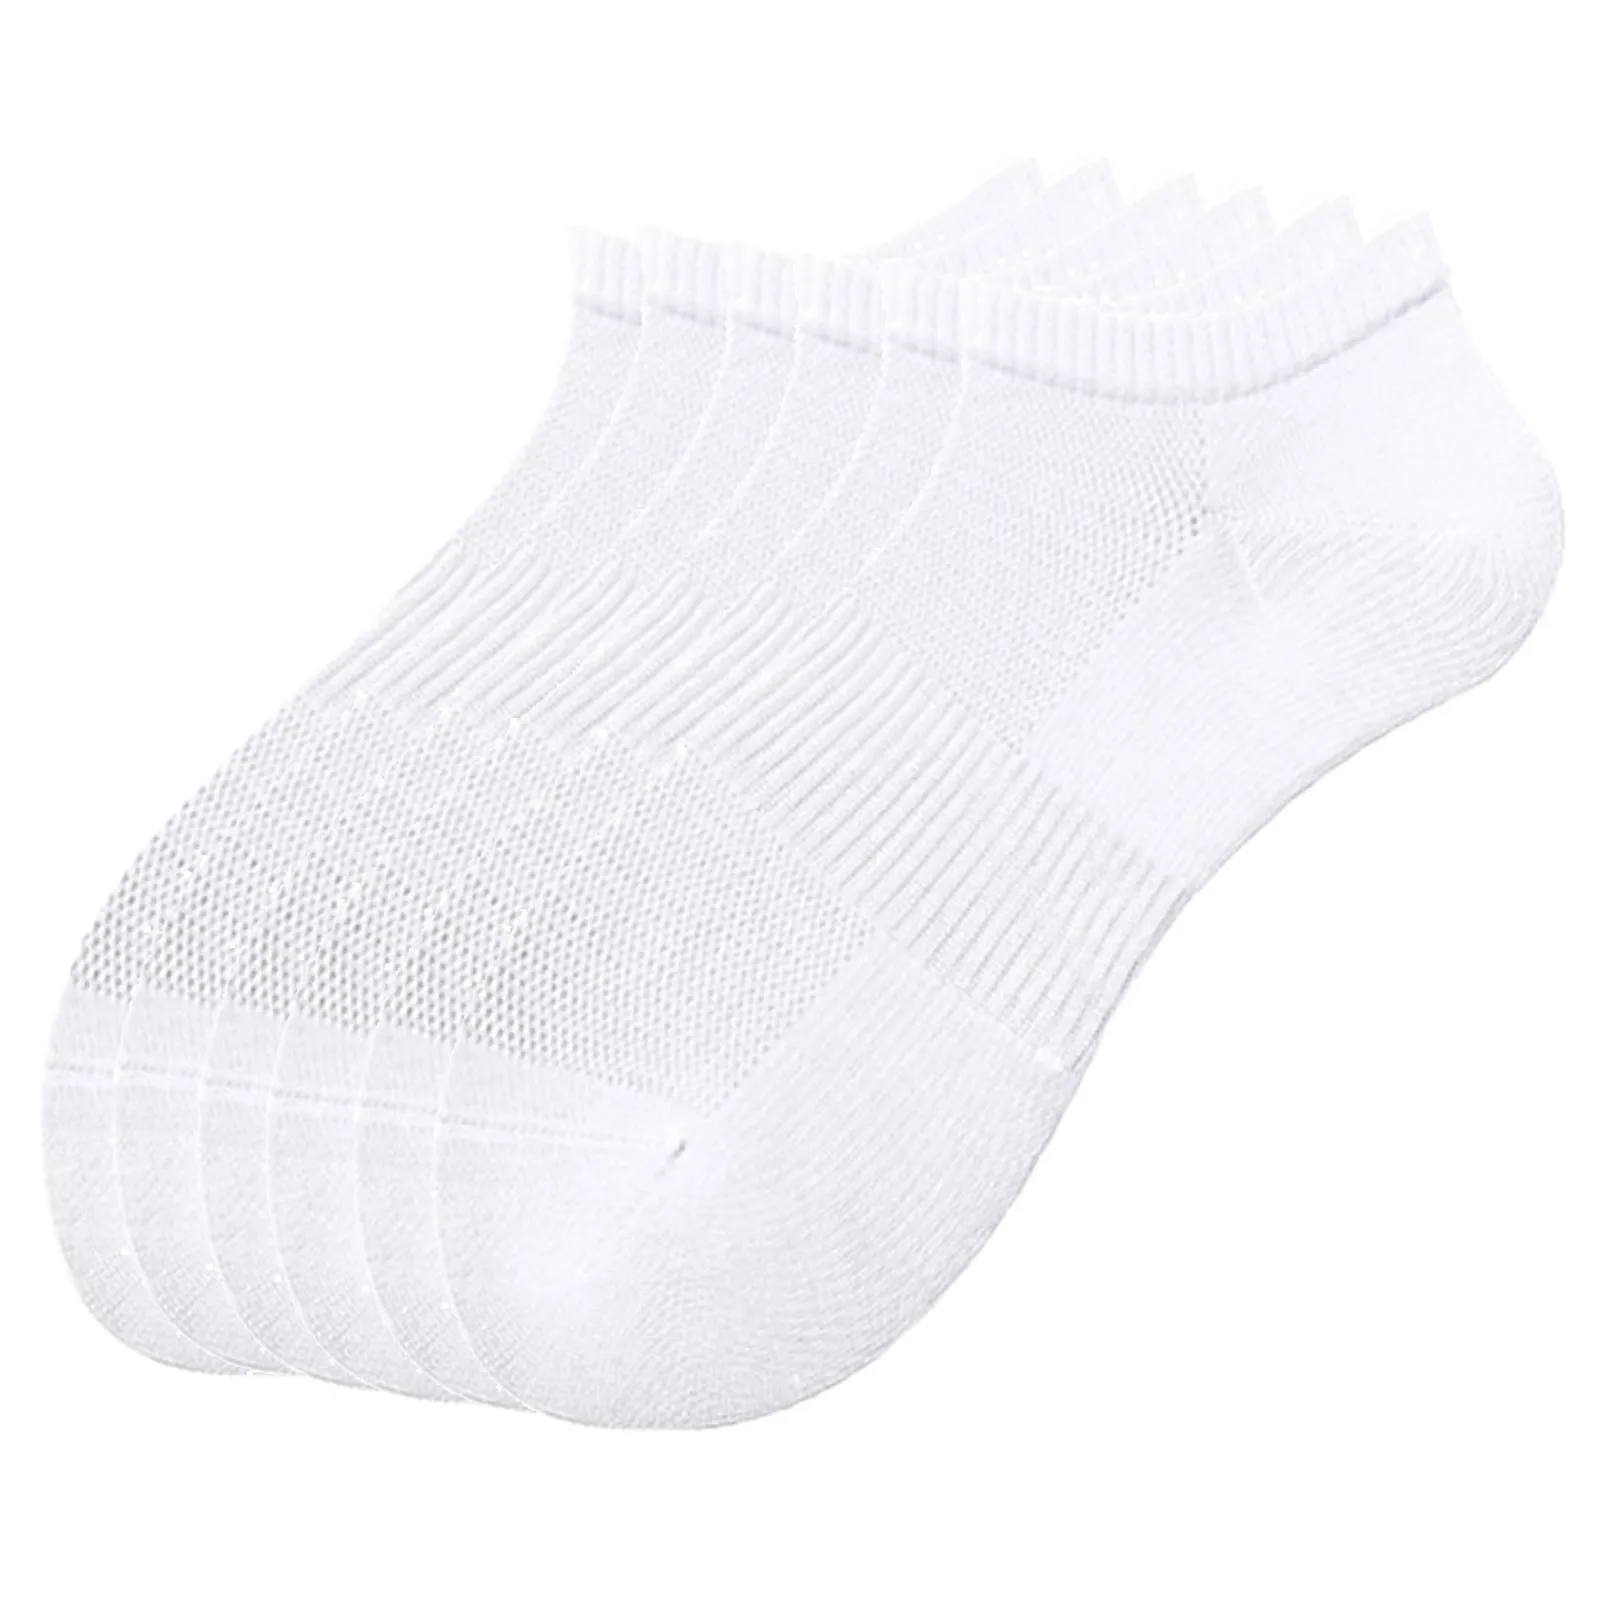 

6 Pairs Moisture Wicking Trainer Socks Athletic Quarter Cushion Compression Socks носки женские чулки носки Calcetines гетры